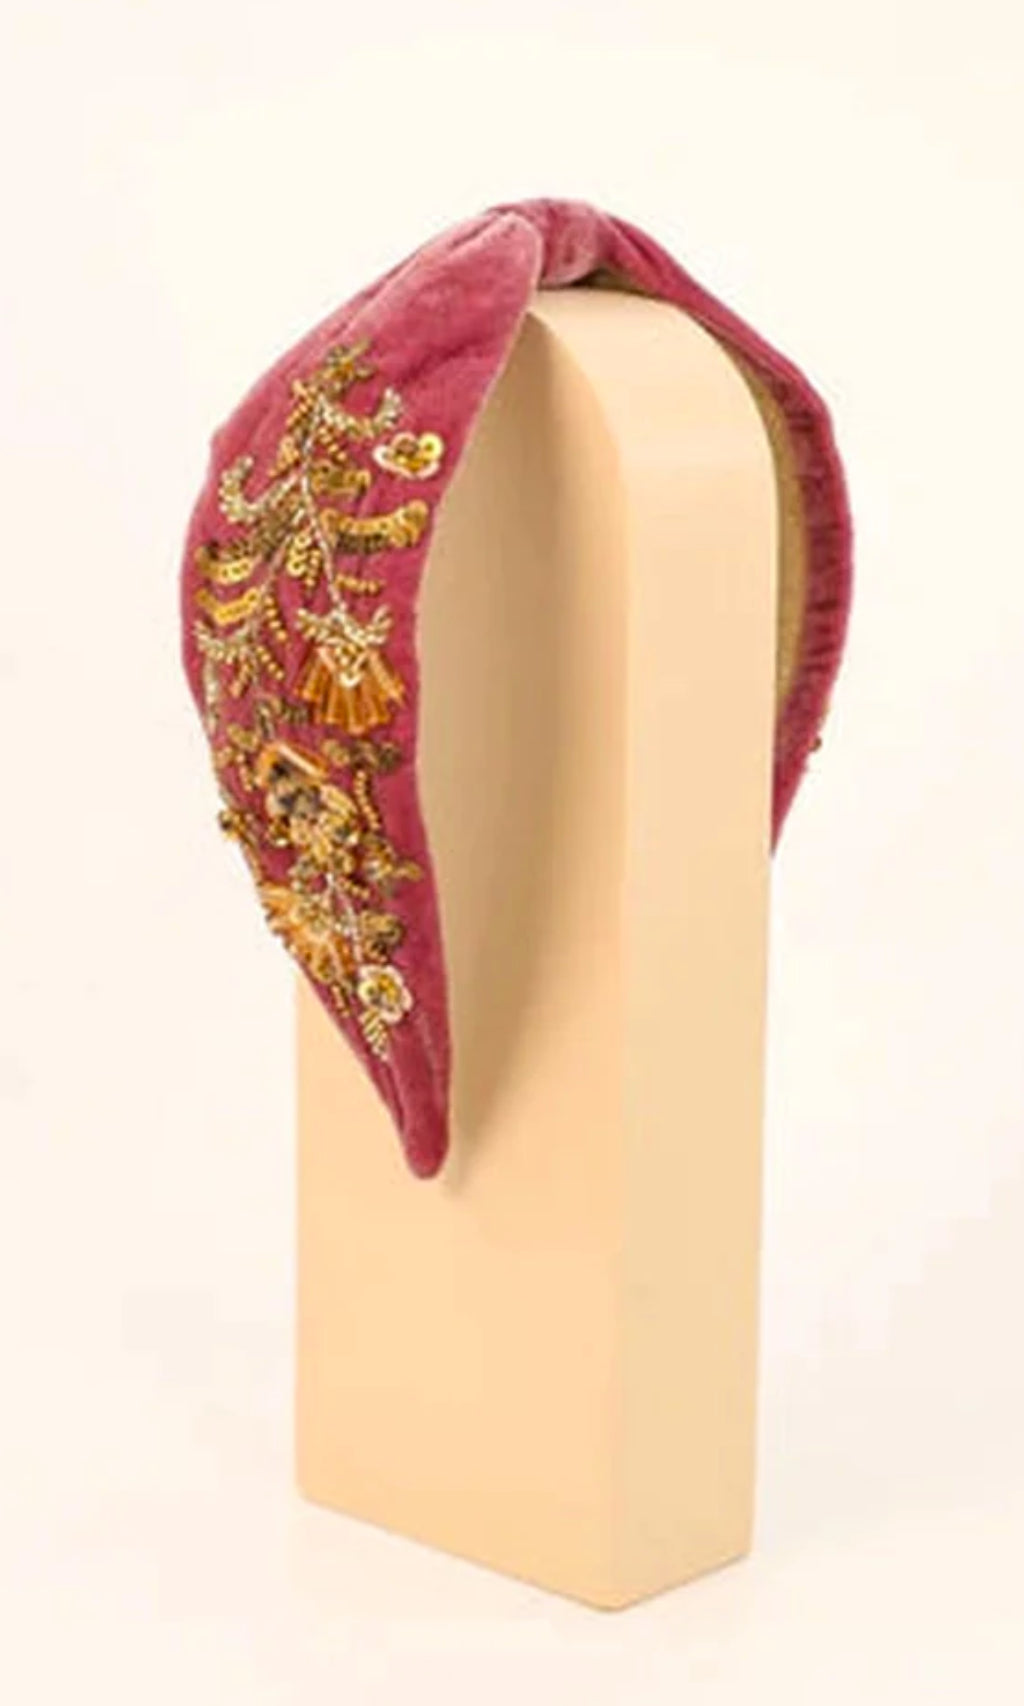 Headband - Embellished Velvet in Amythest